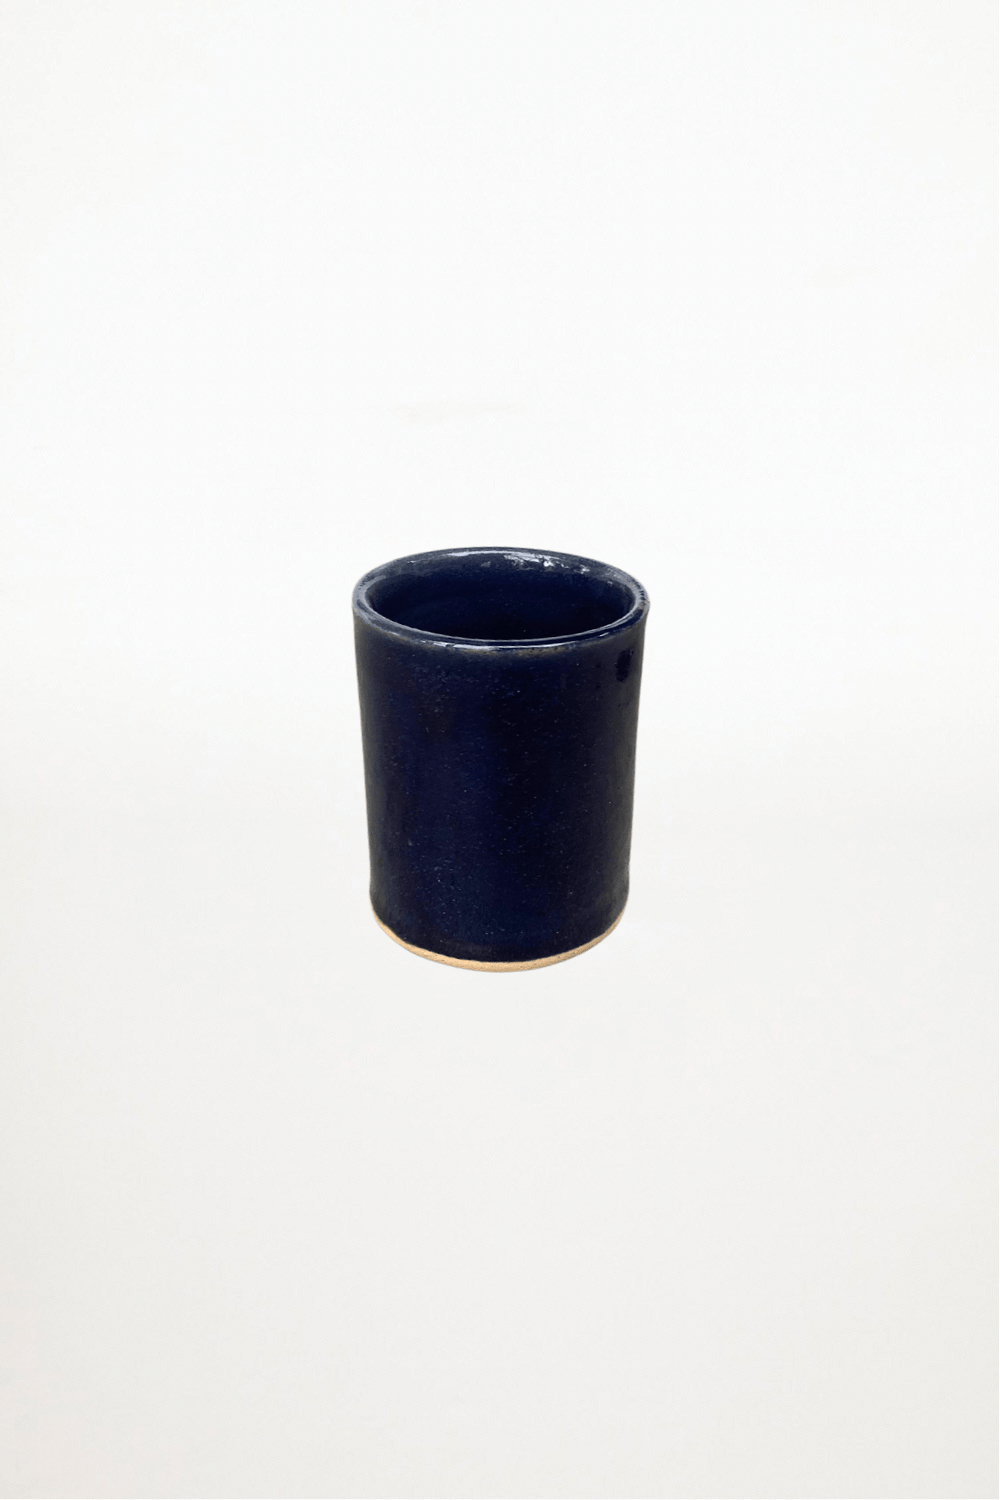 Bennetts Pottery - Cup - Dark Blue - Ensemble Studios